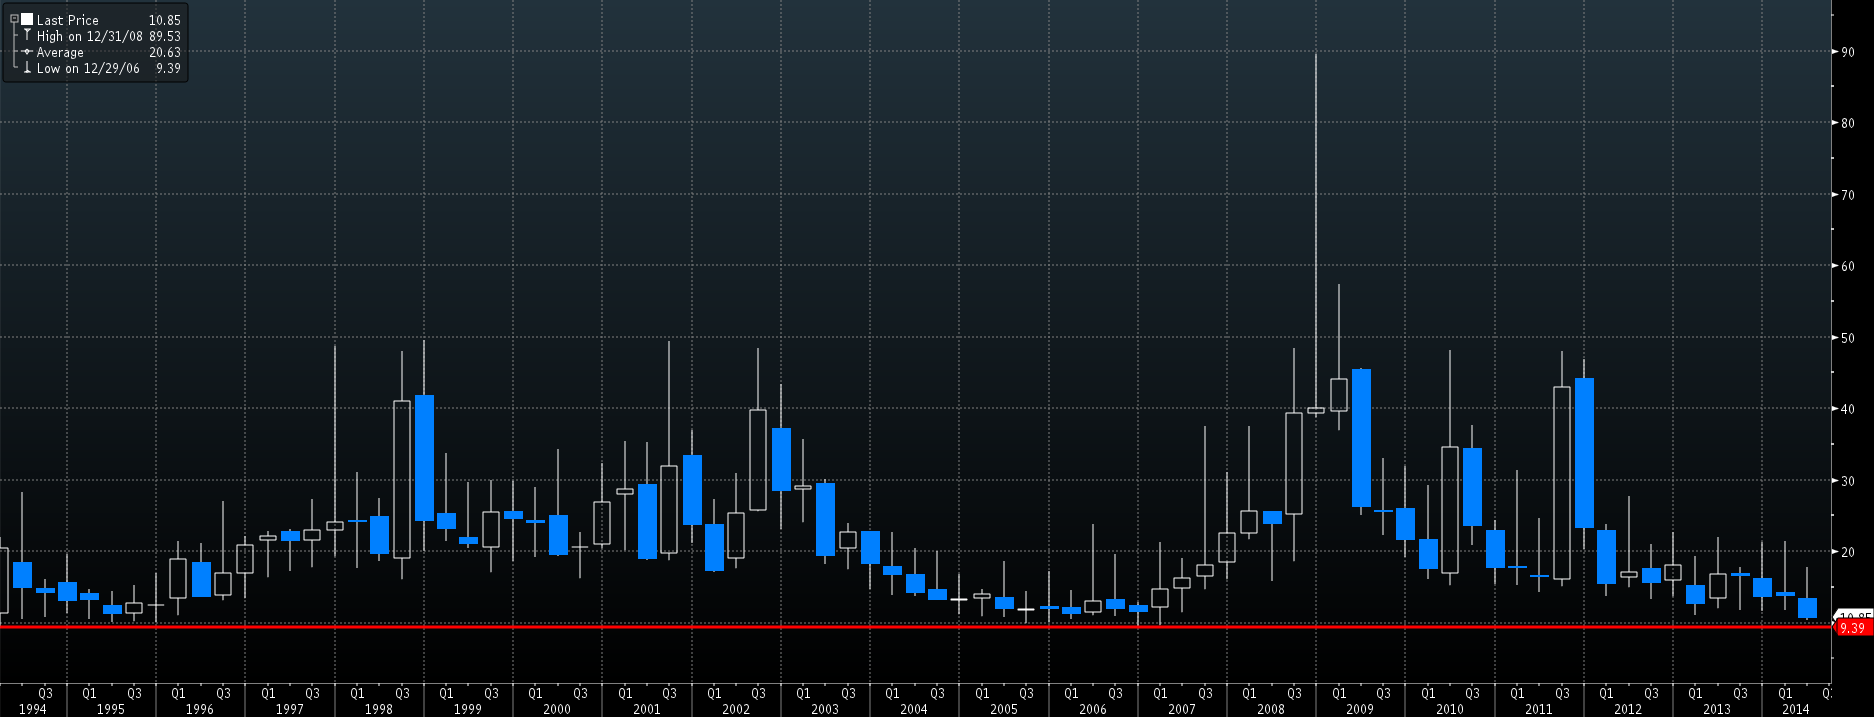 Bloomberg VIX Index 1994 -2014